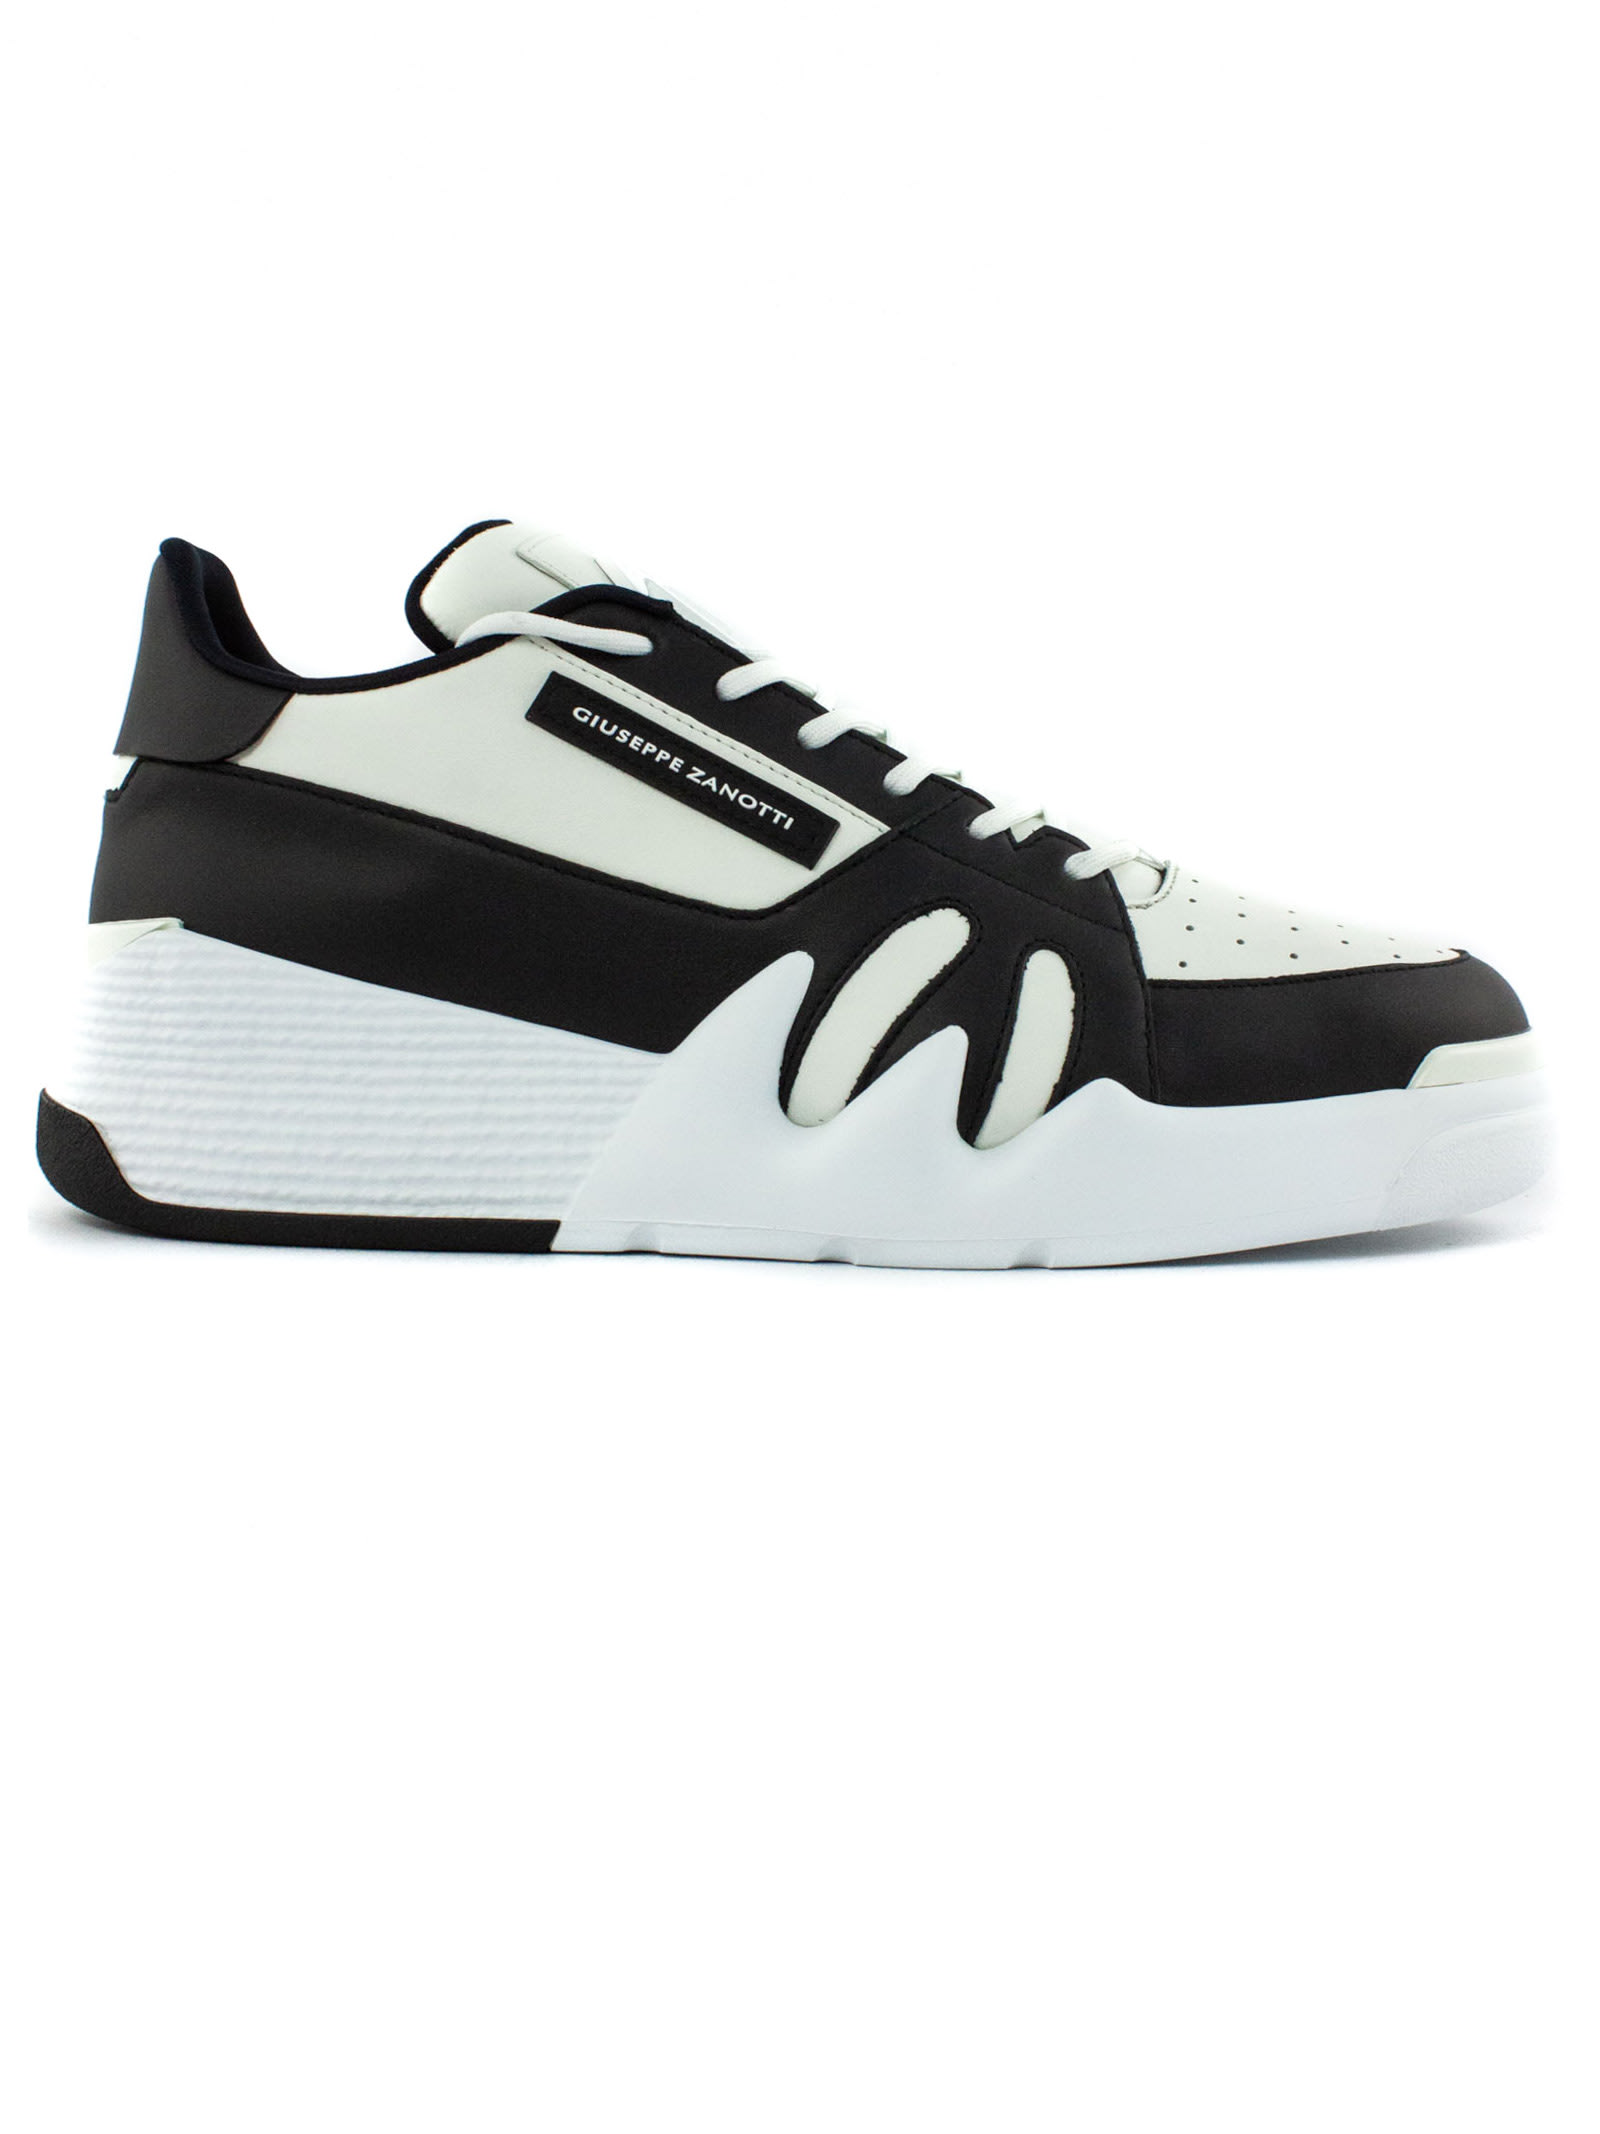 Giuseppe Zanotti Black And White Leather Sneakers